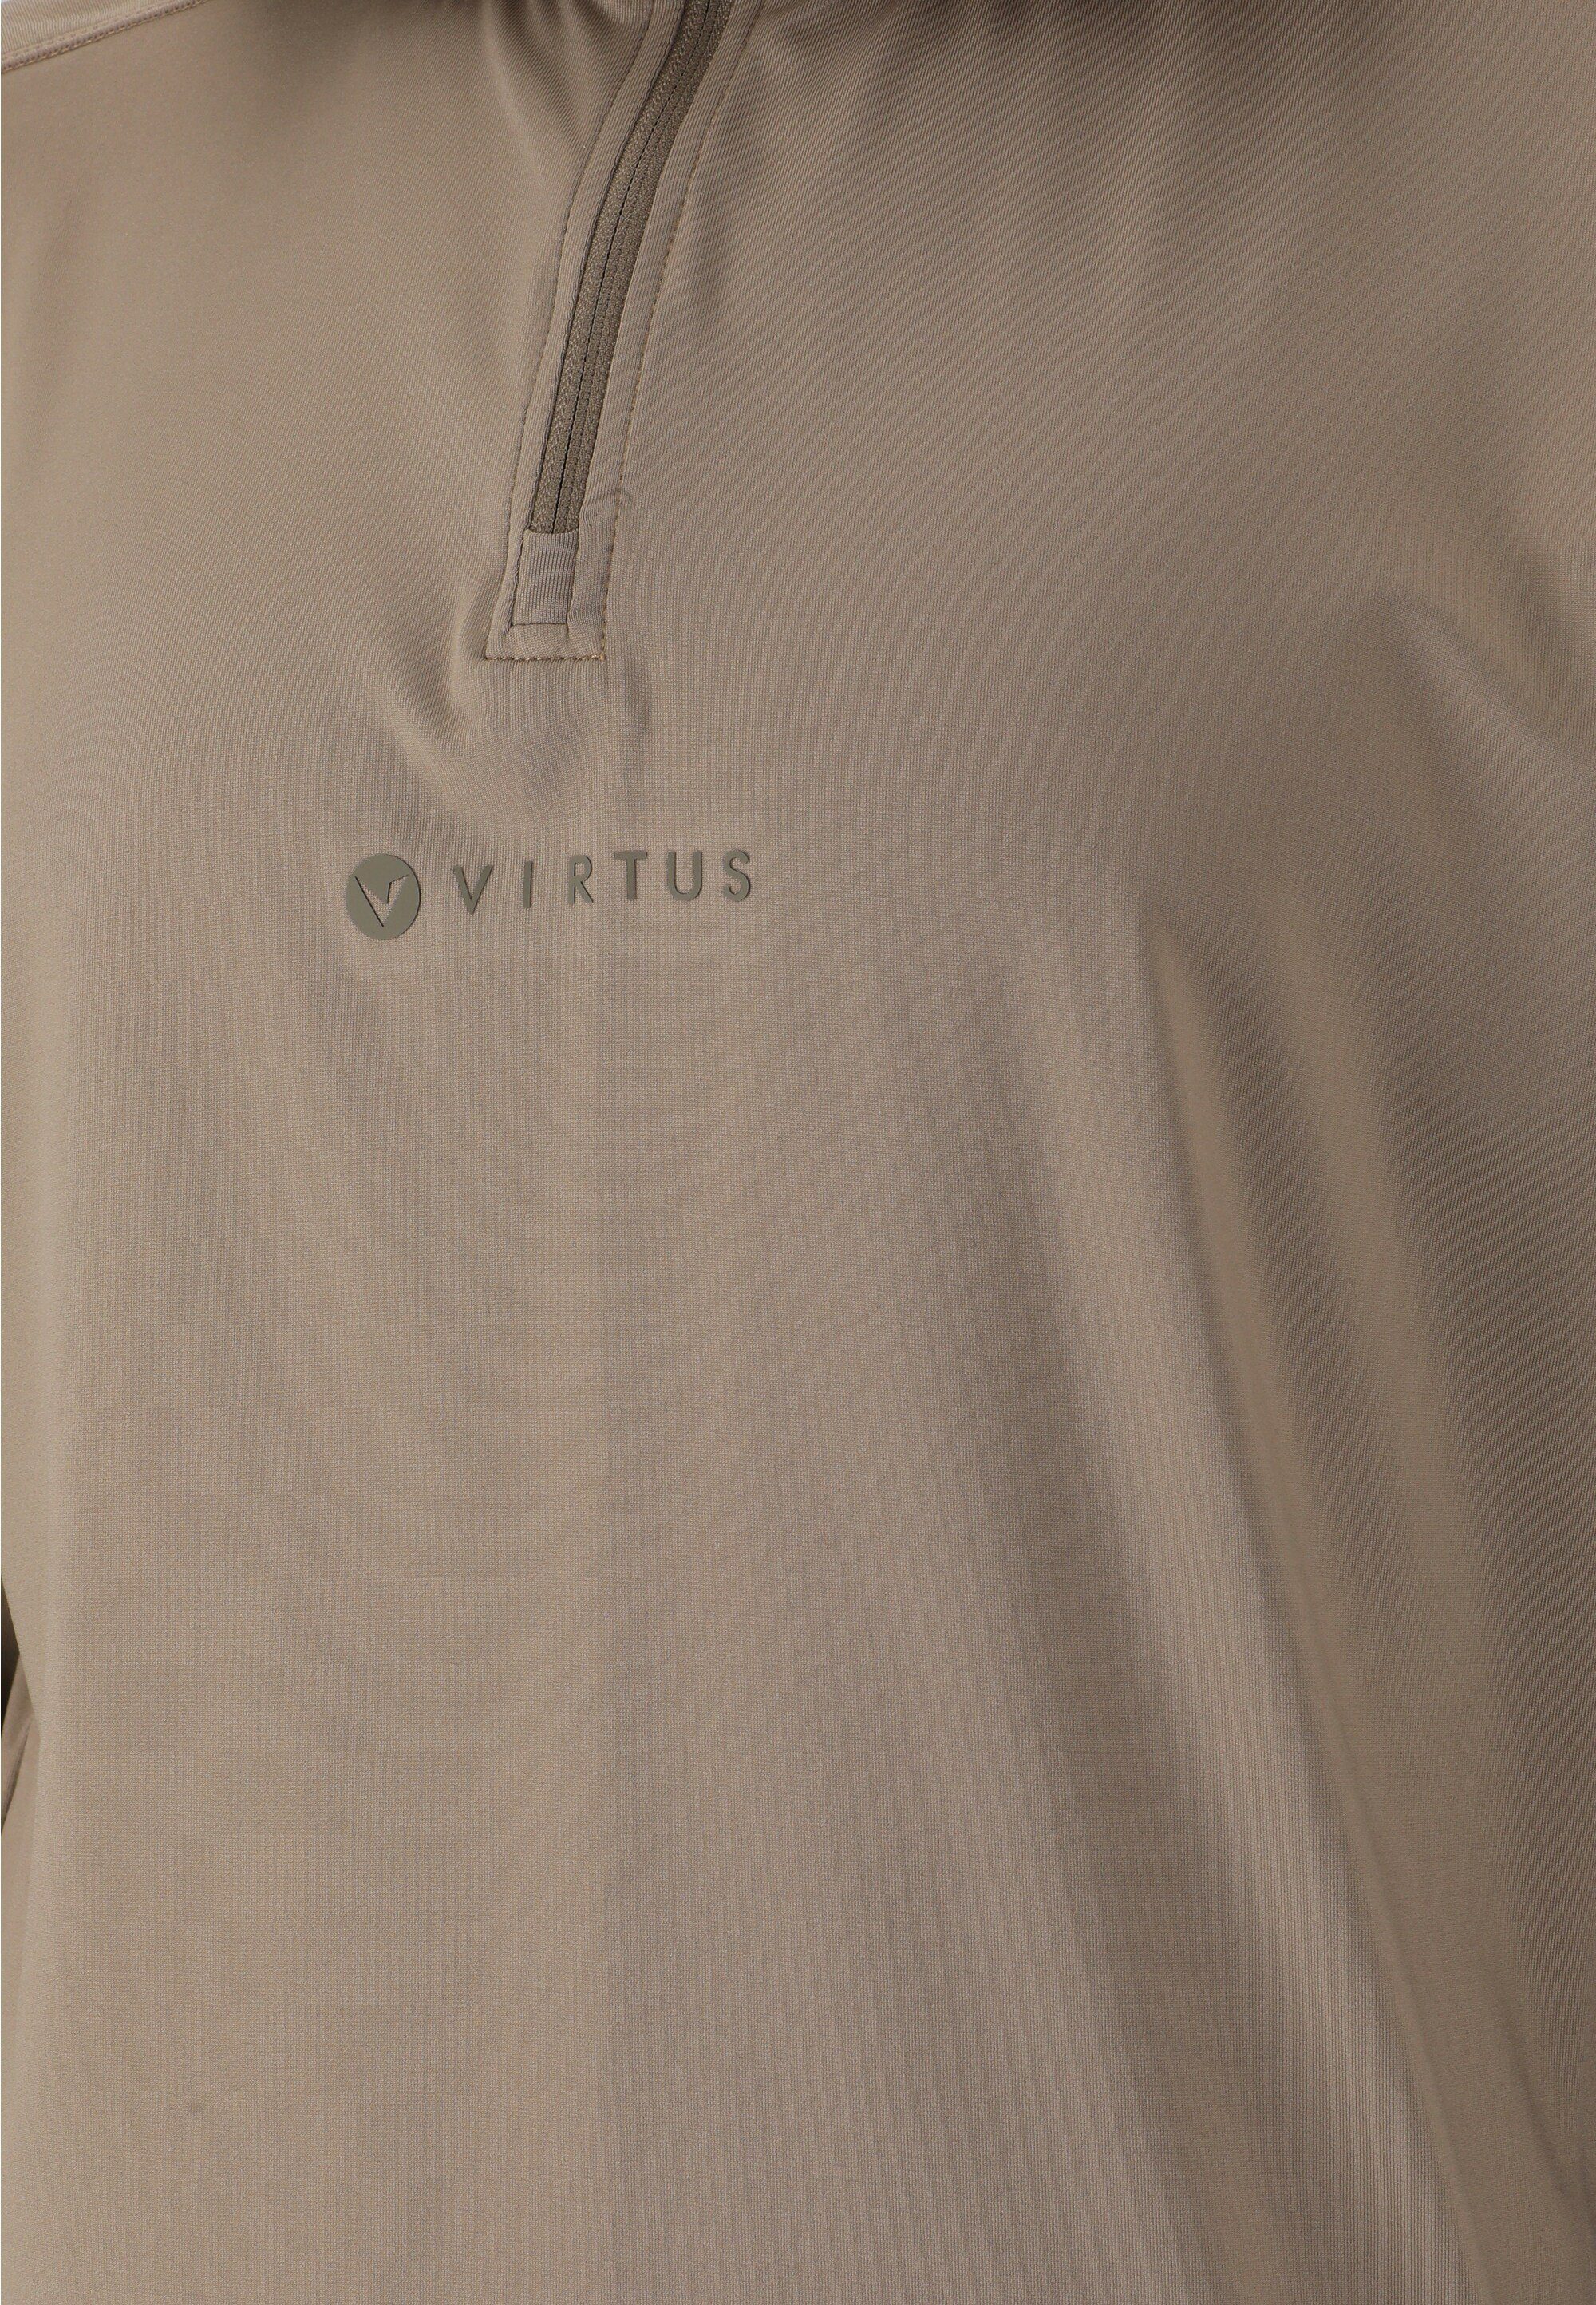 Virtus Bale Kapuzensweatshirt praktischer mit Dry-Funktion hellbraun Quick